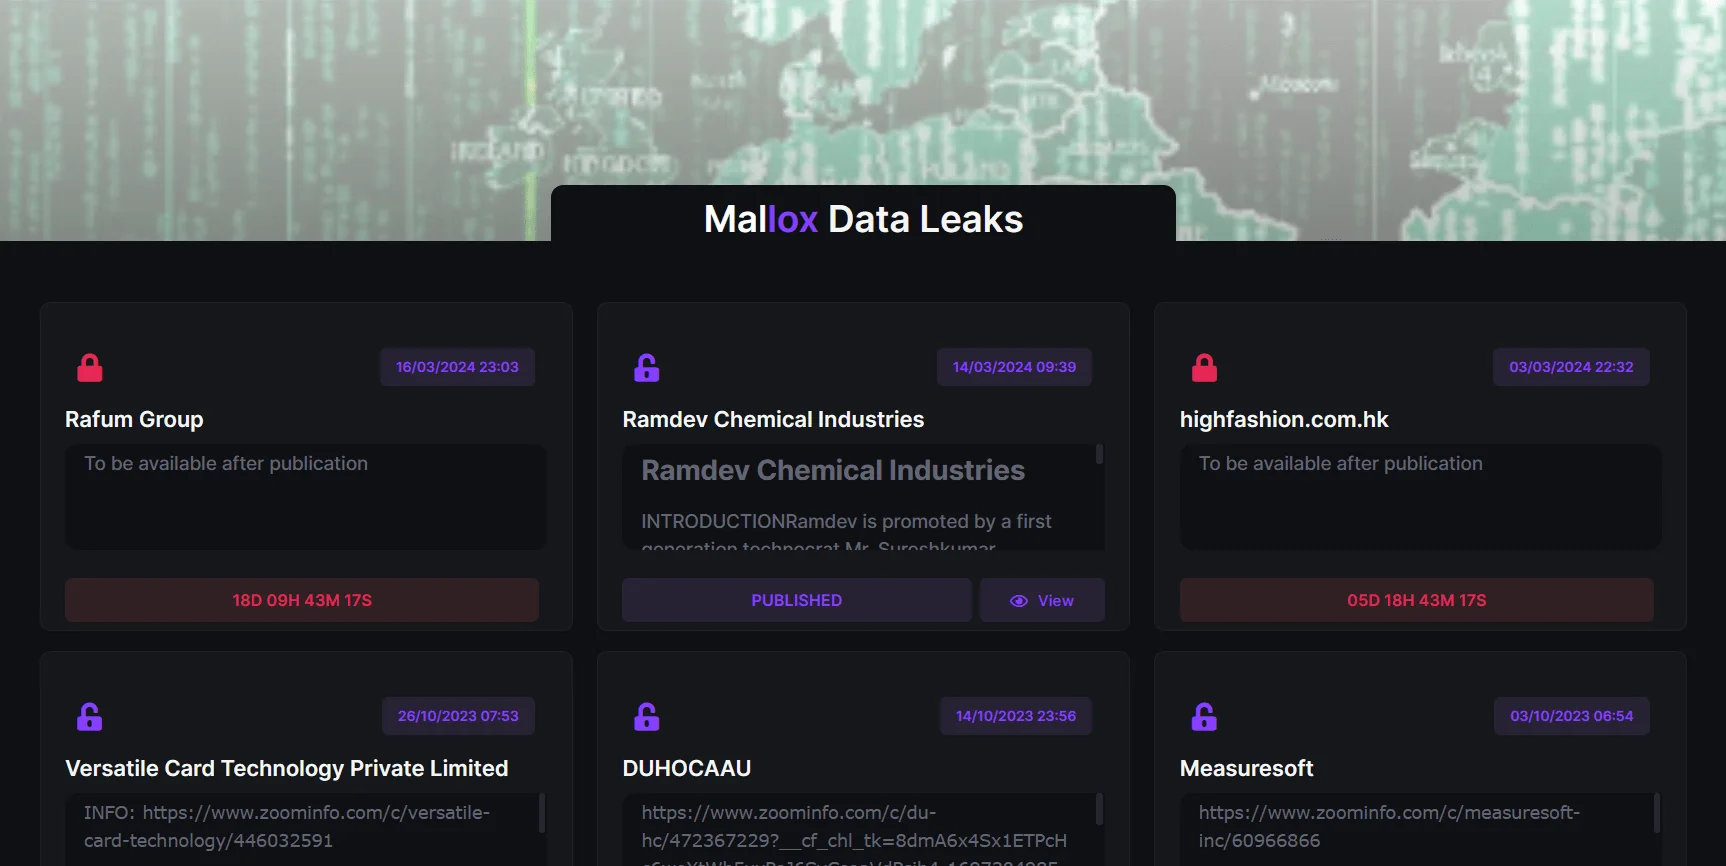 Mallox website is named as Mallox Data Leaks